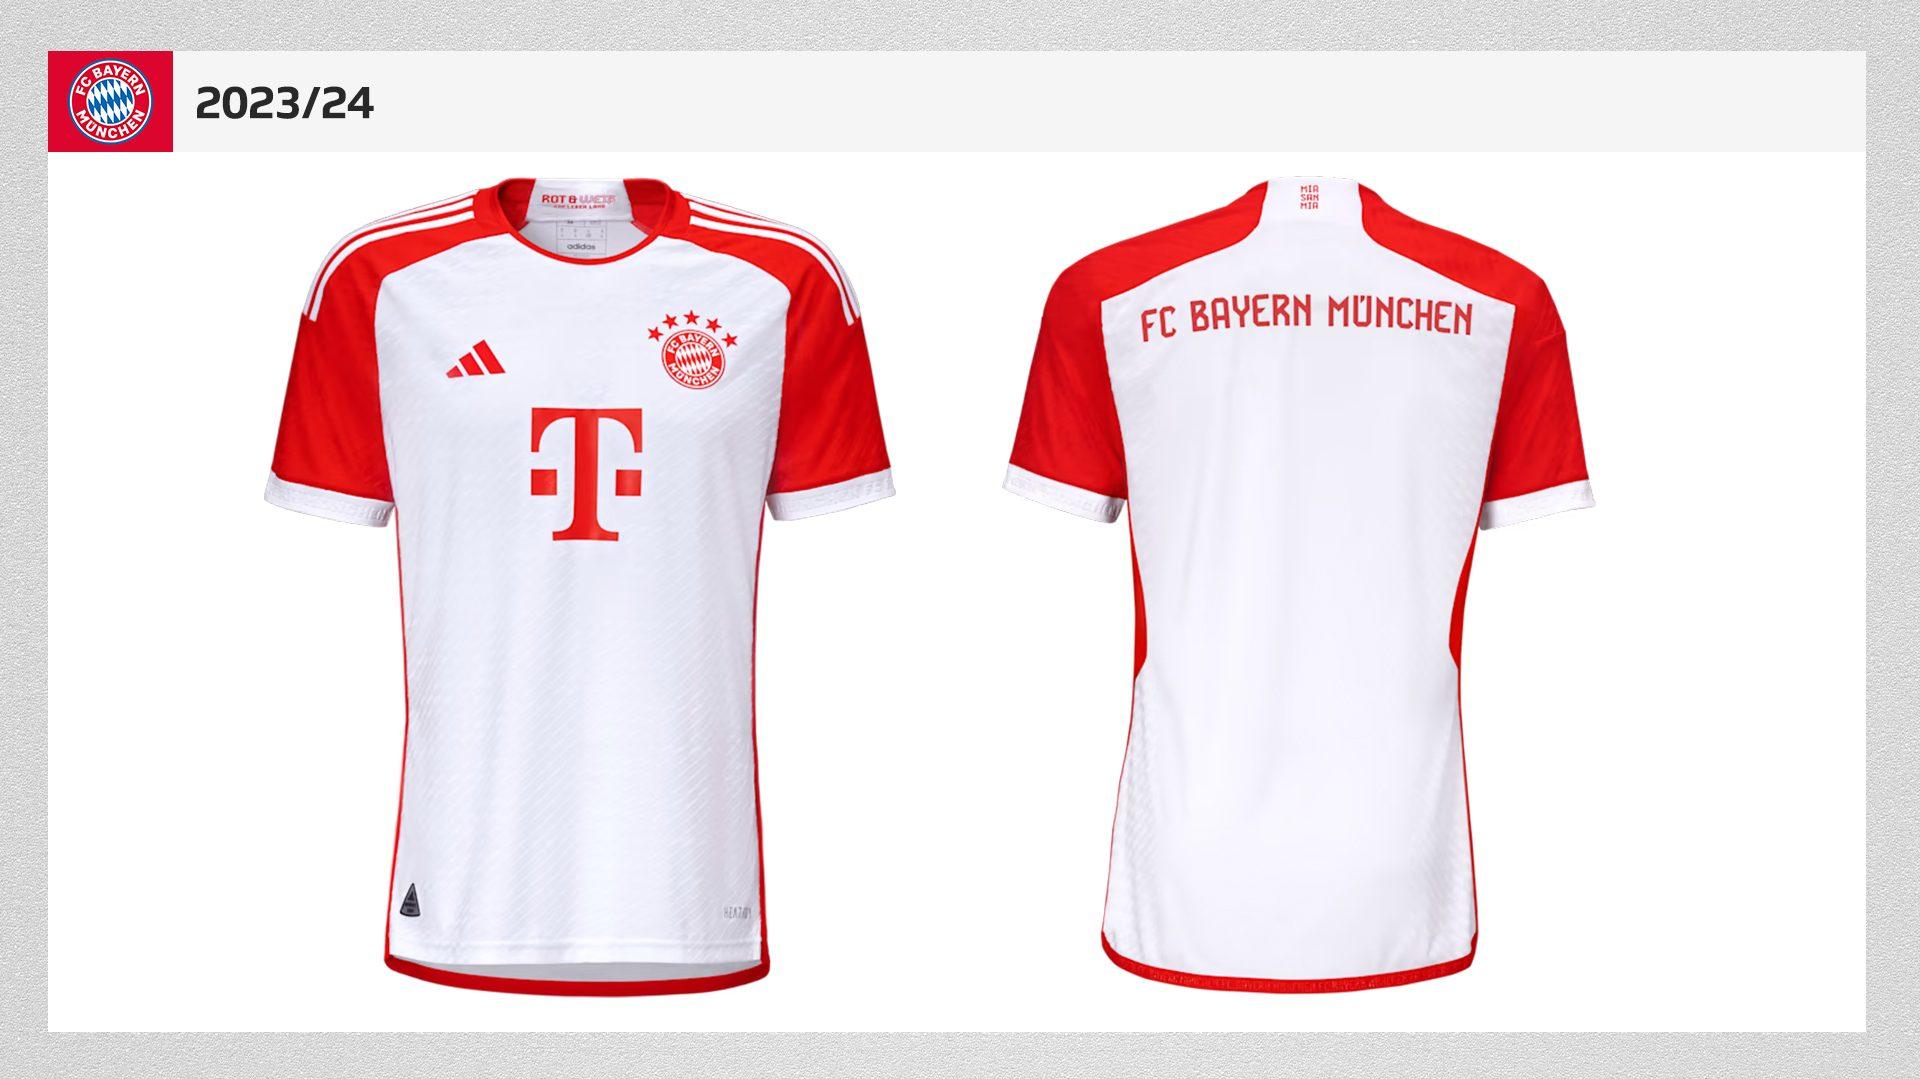 Free download Bayern Munich release home jersey for 202324 season